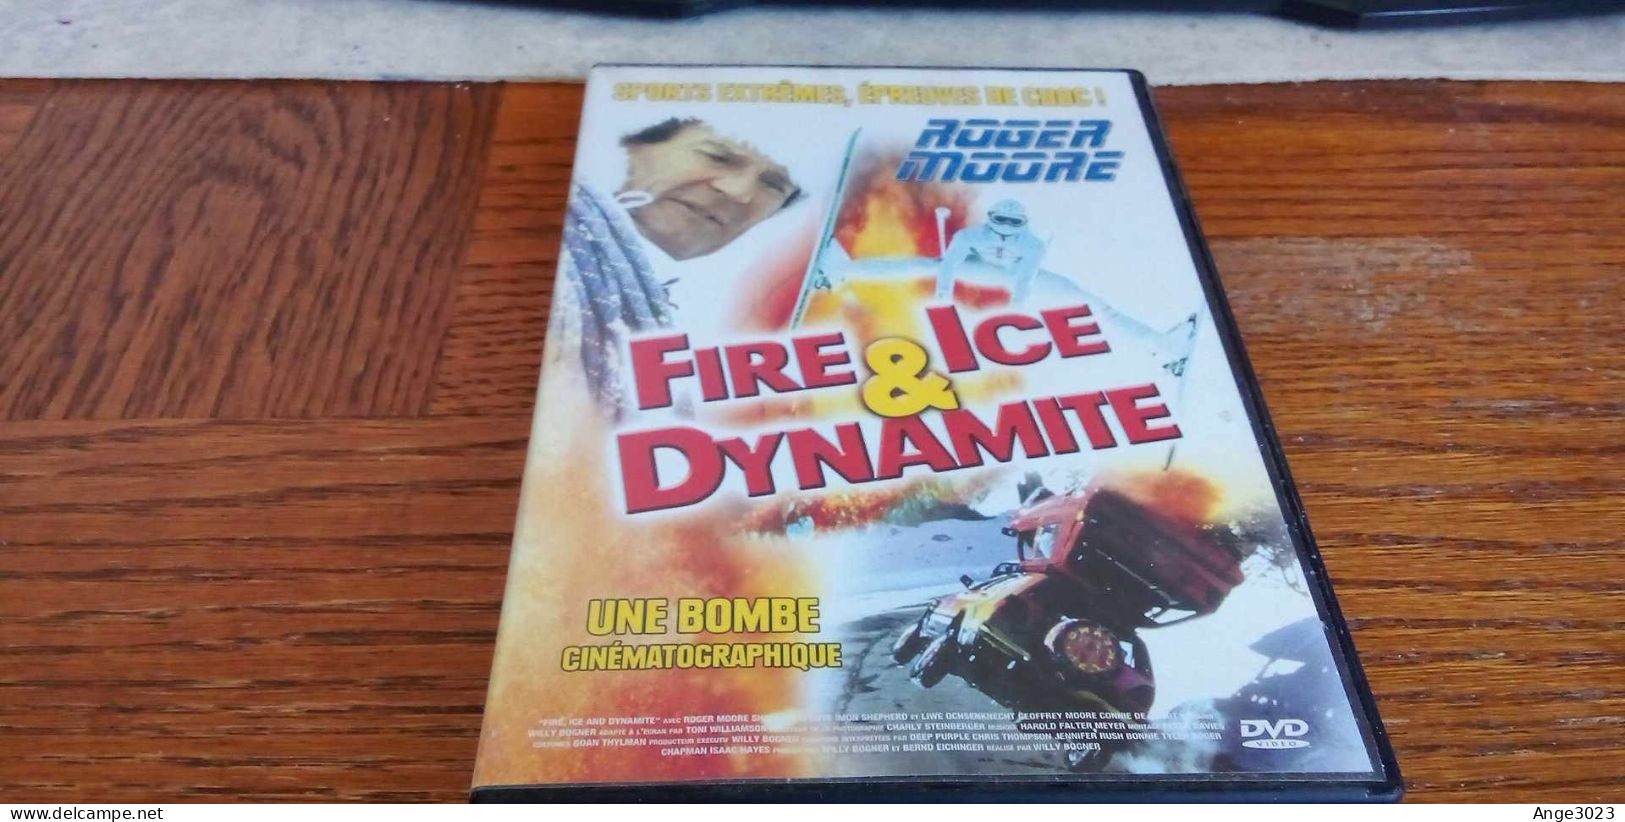 FIRE ICE & DYNAMITE - Acción, Aventura